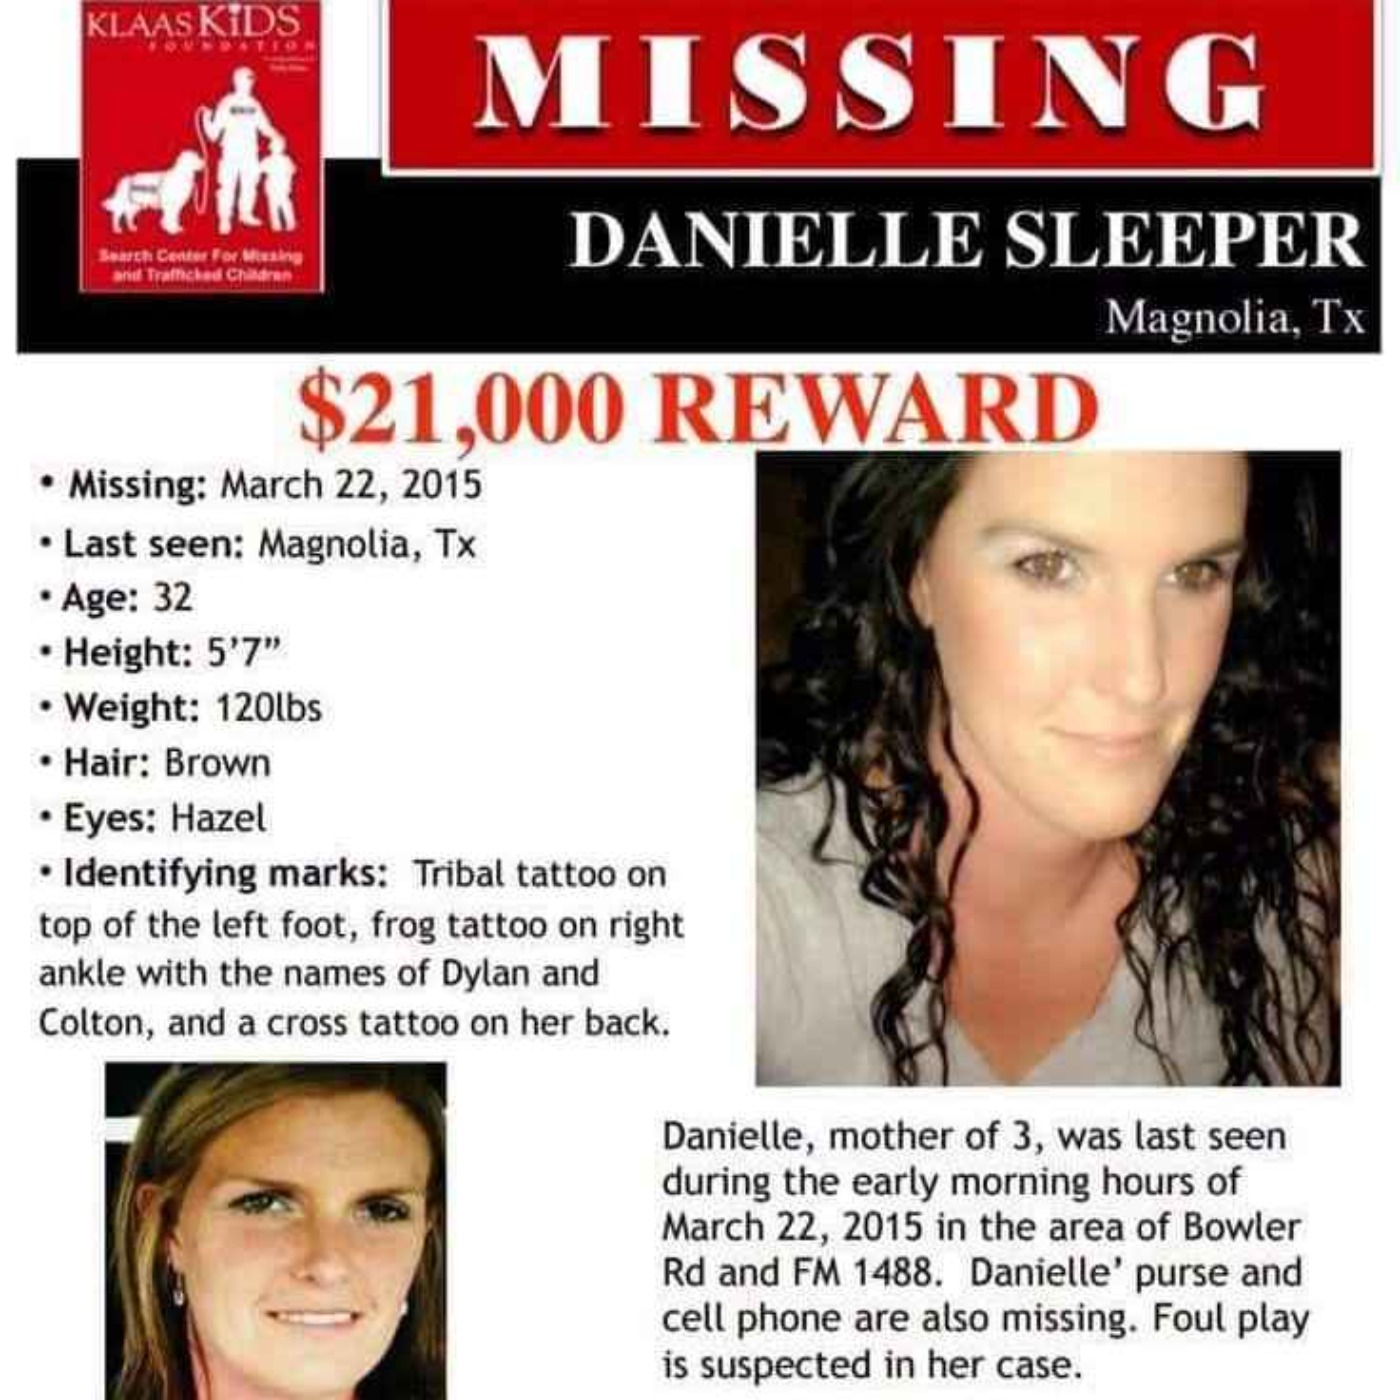 MISSING: Danielle Sleeper (Magnolia, Texas)